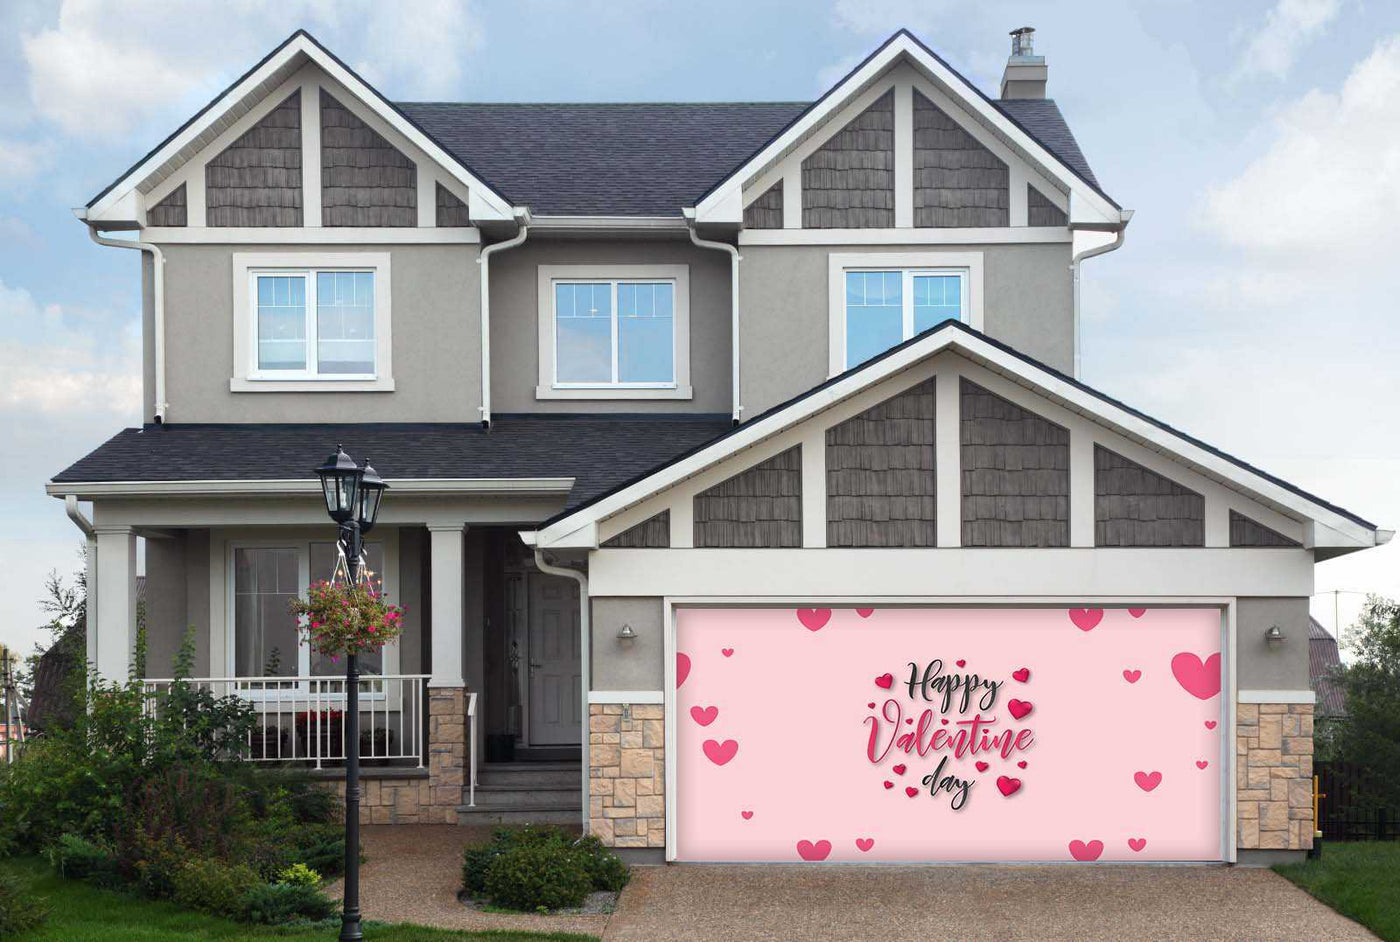 Happy Valentines Day Garage Door Cover Wrap Mural Home Decoration (Design #2)